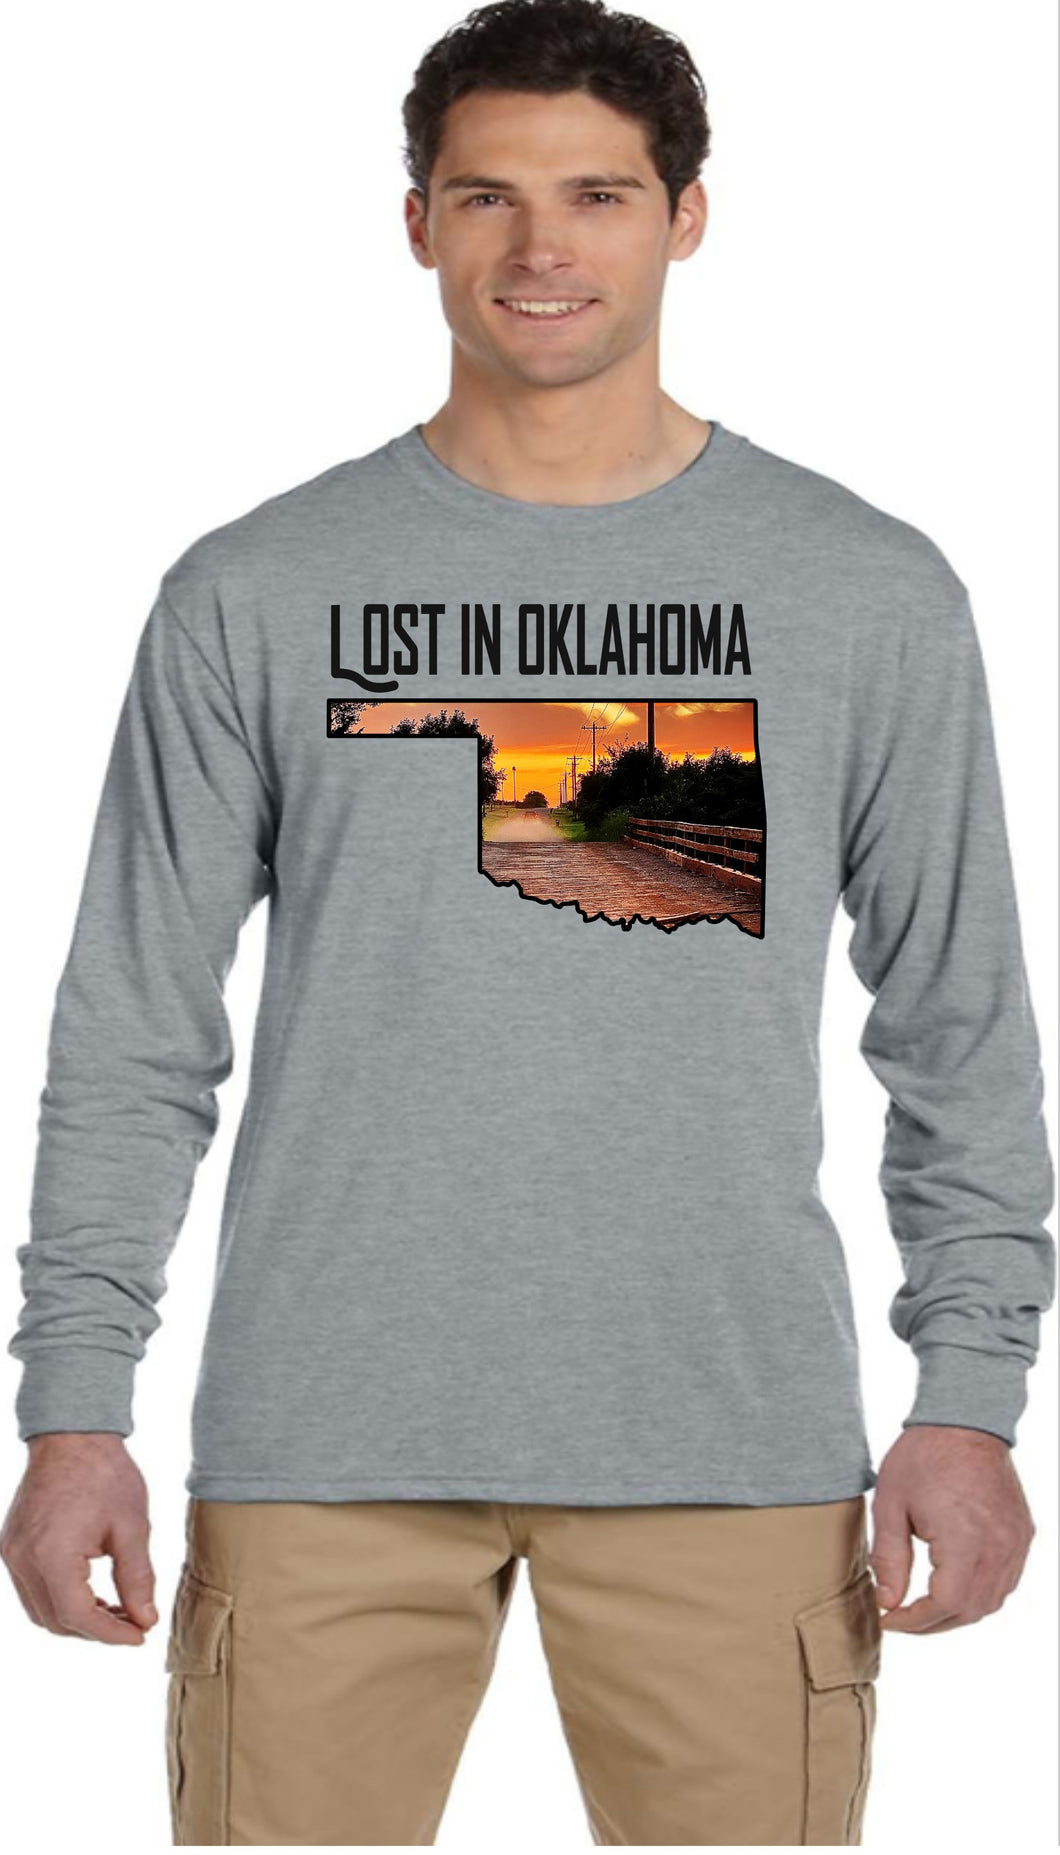 Lost in Oklahoma Long Sleeve Tee